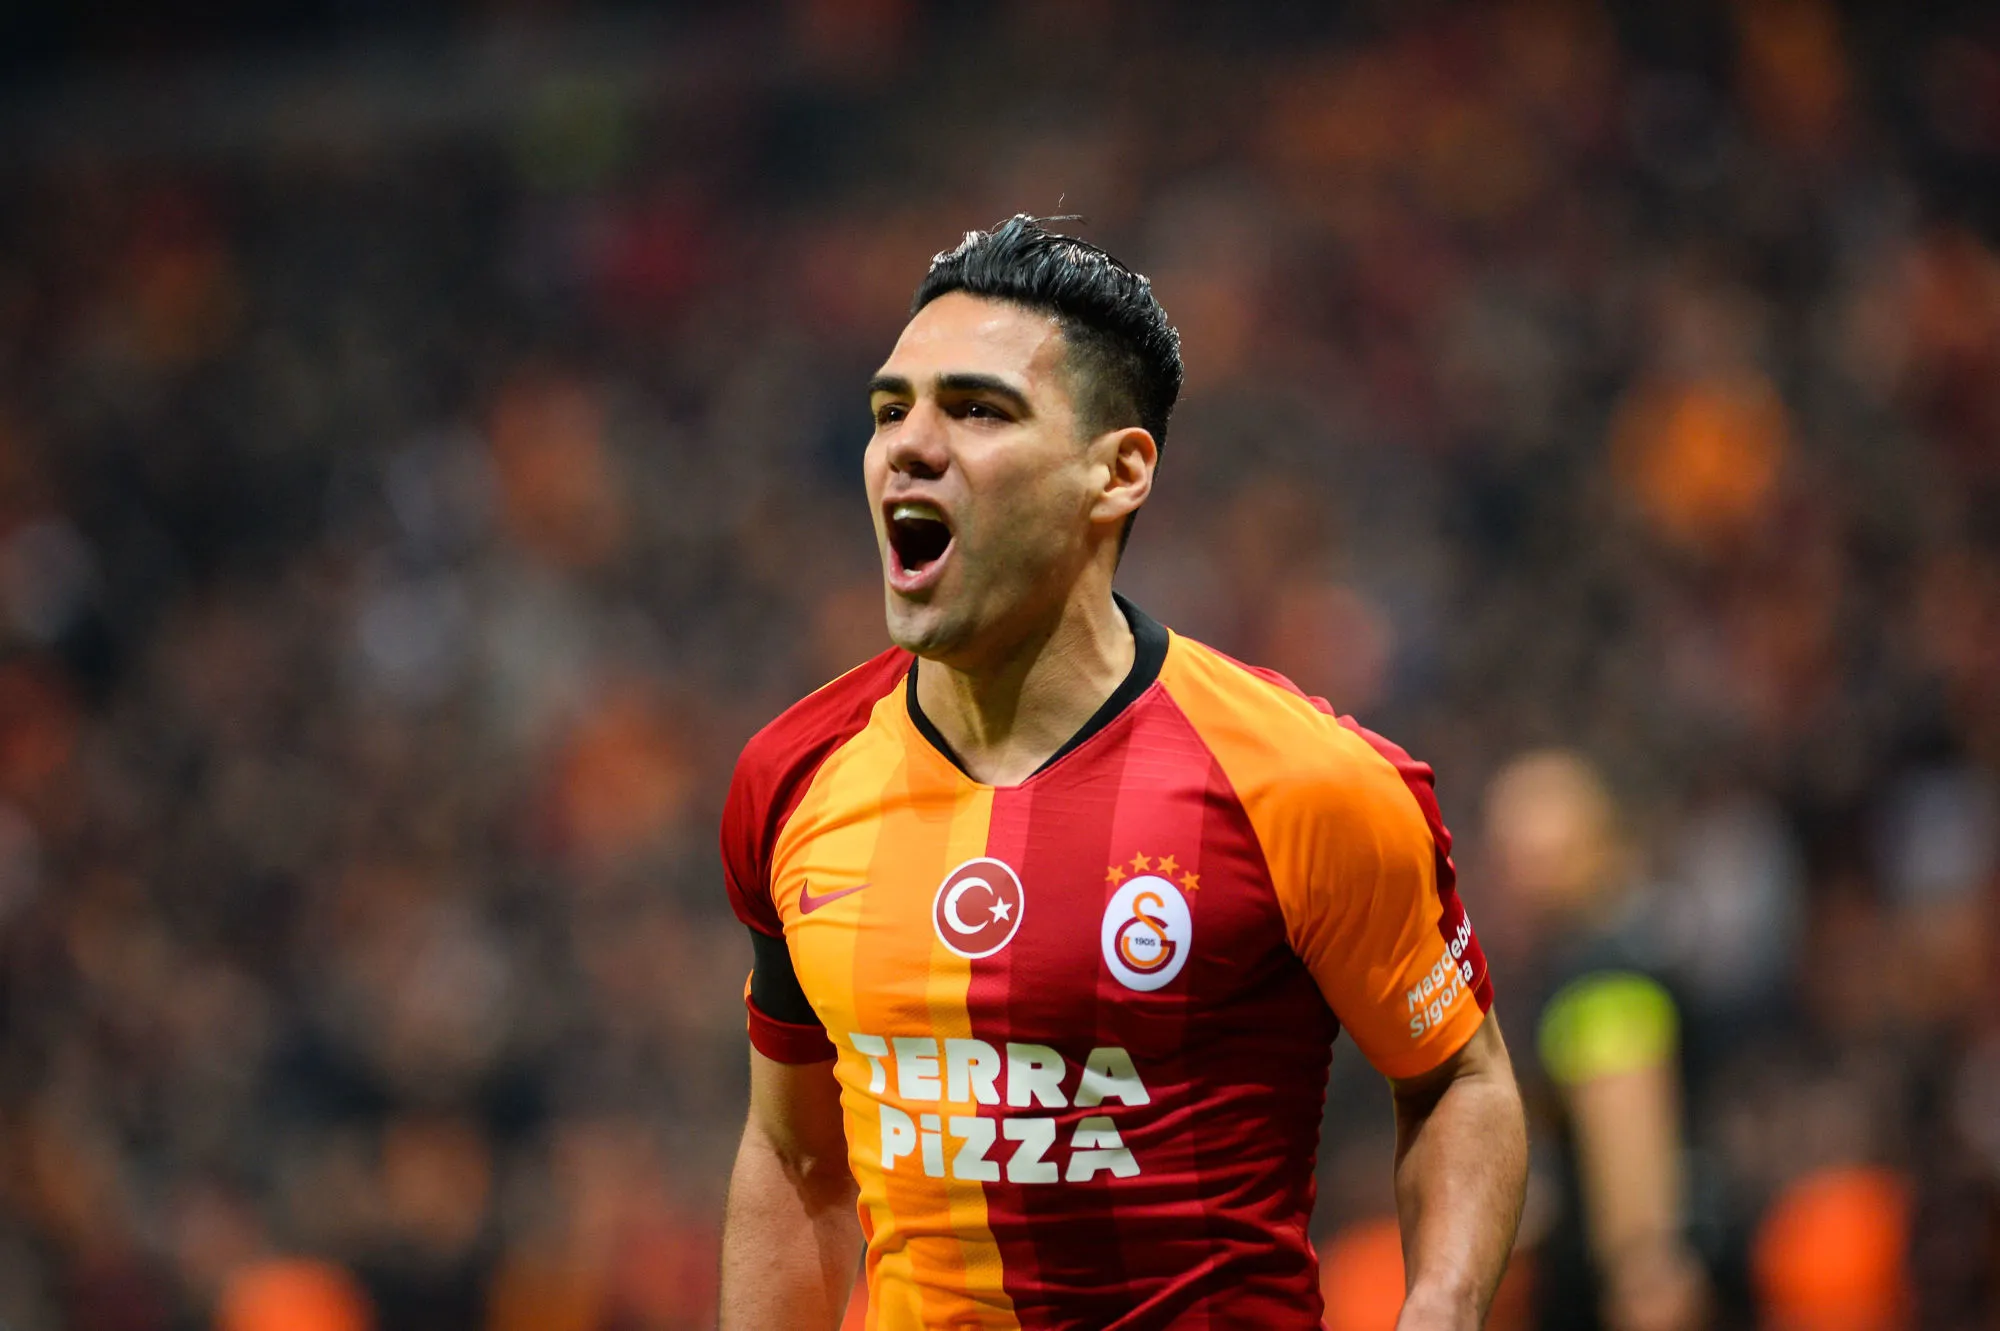 Pronostic Galatasaray Besiktas : Analyse, prono et cotes du match de Super Lig